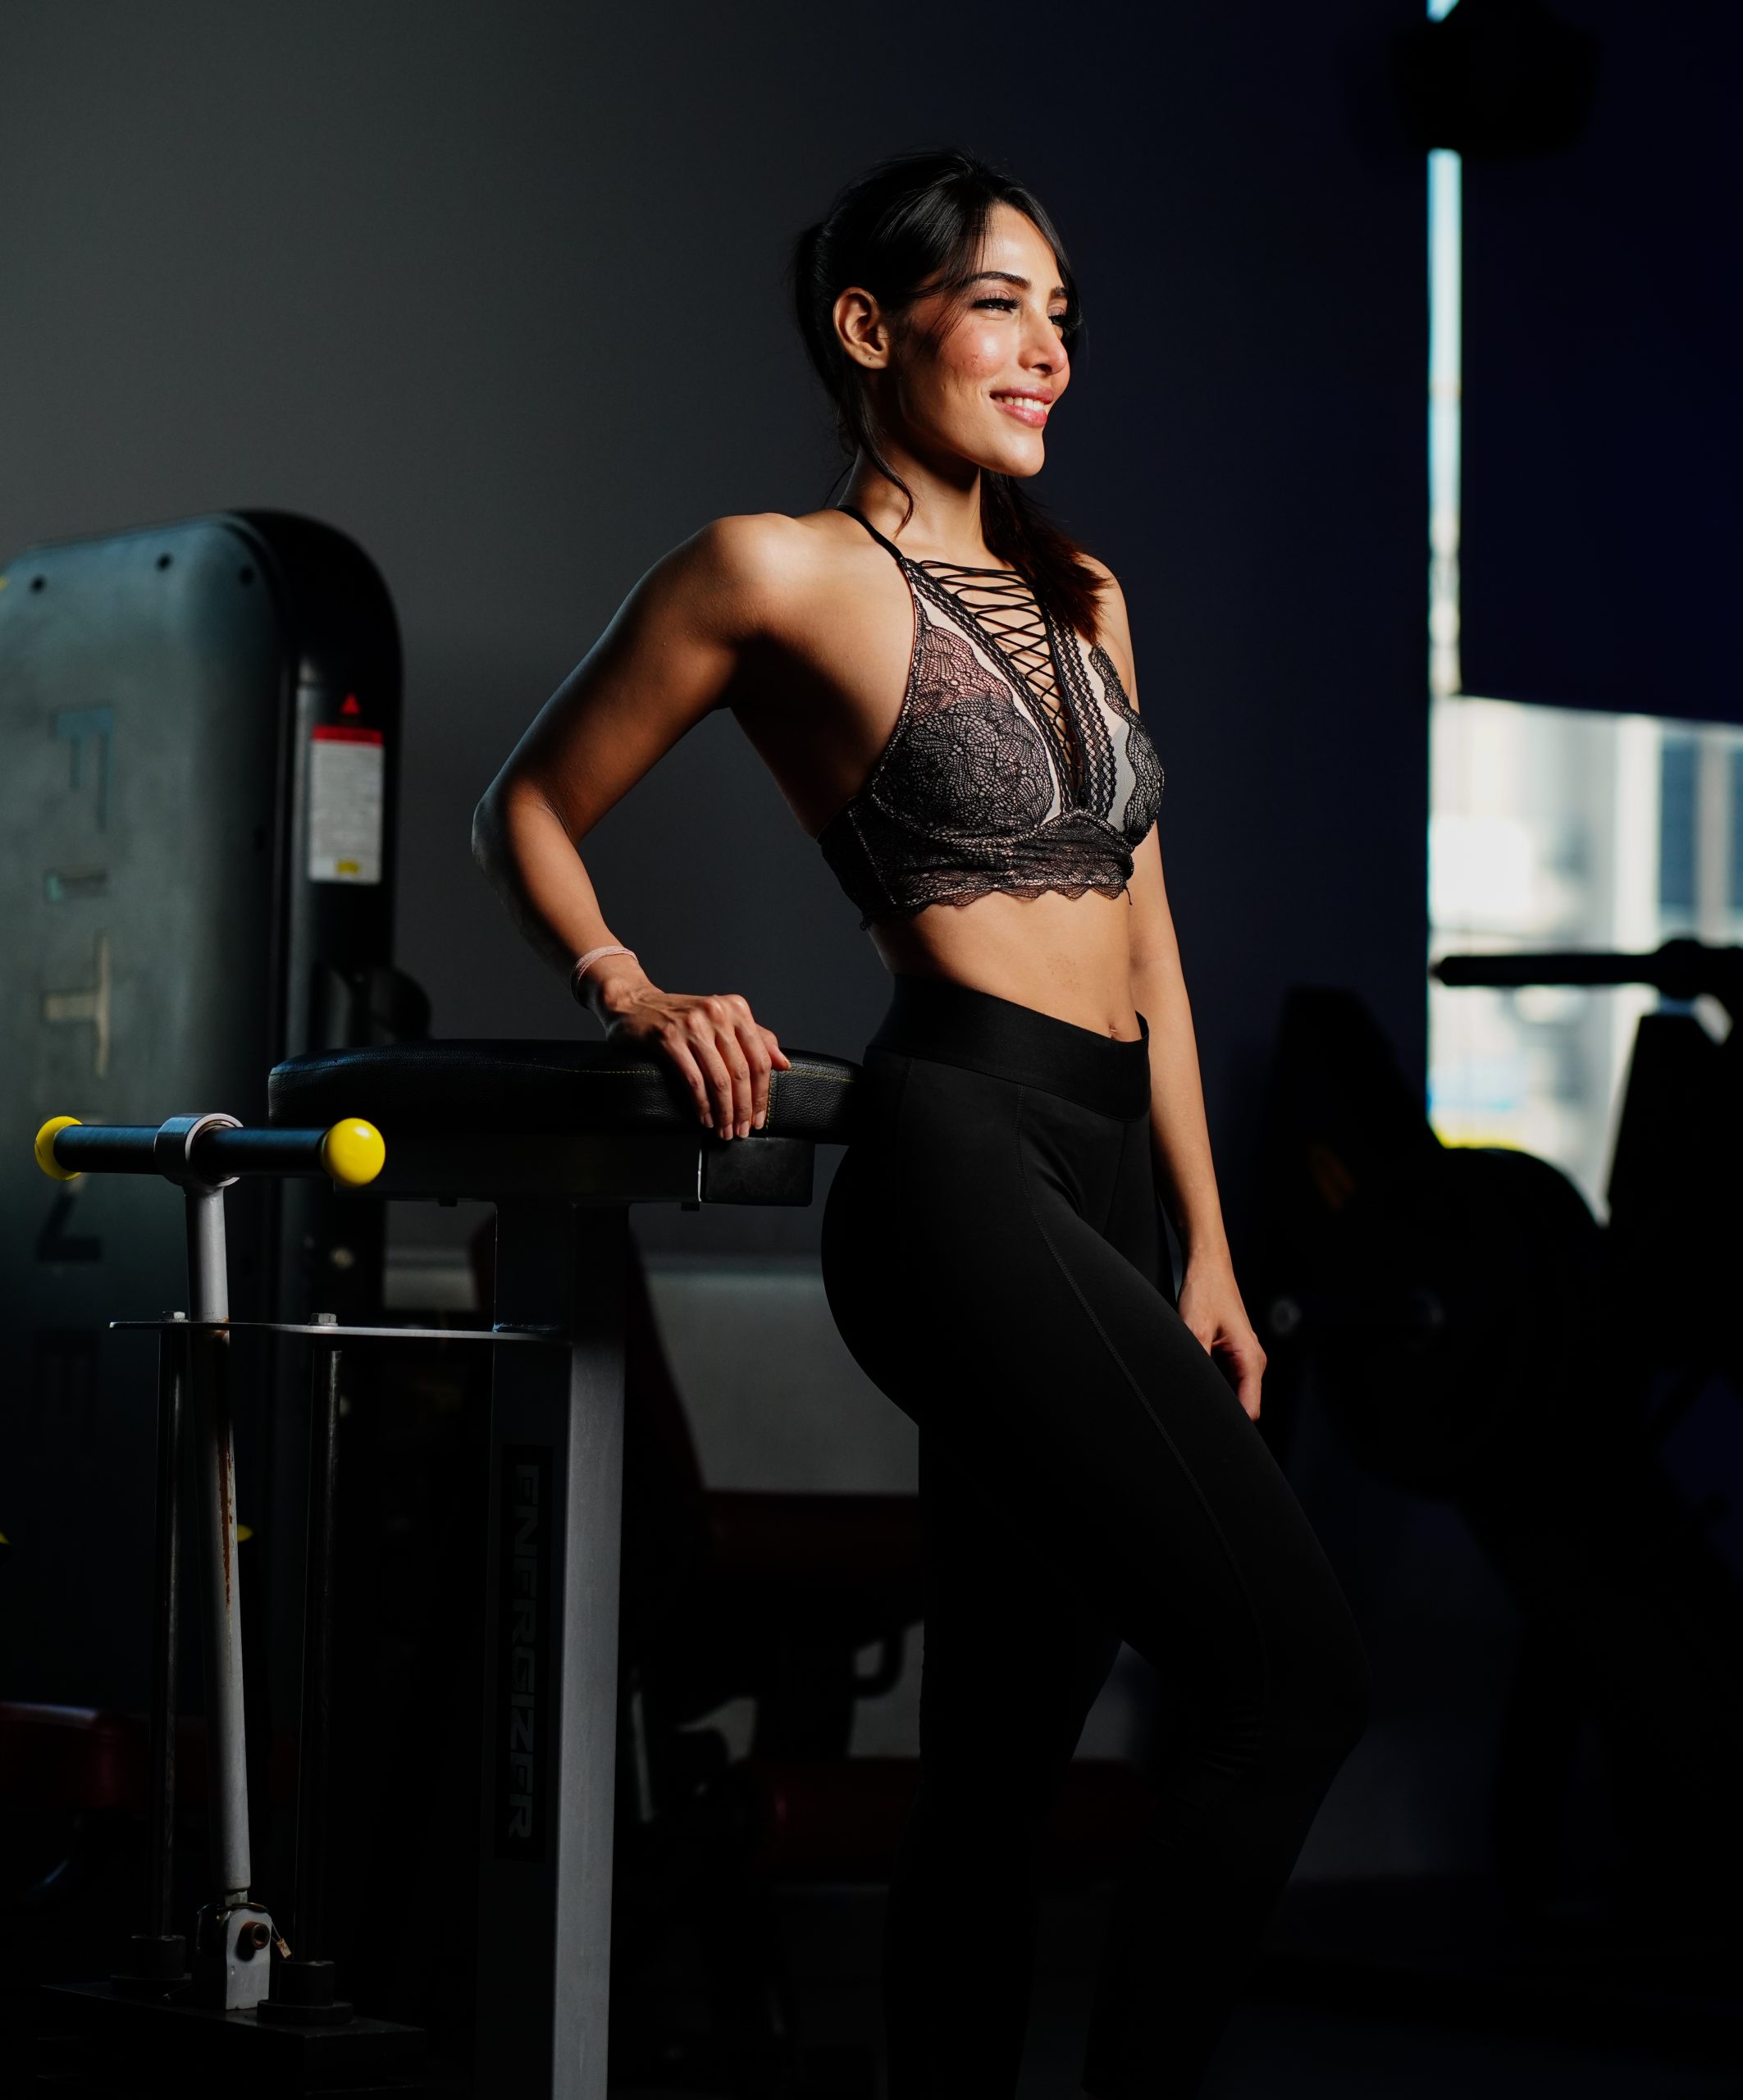 Fit Woman Gym Model Posing